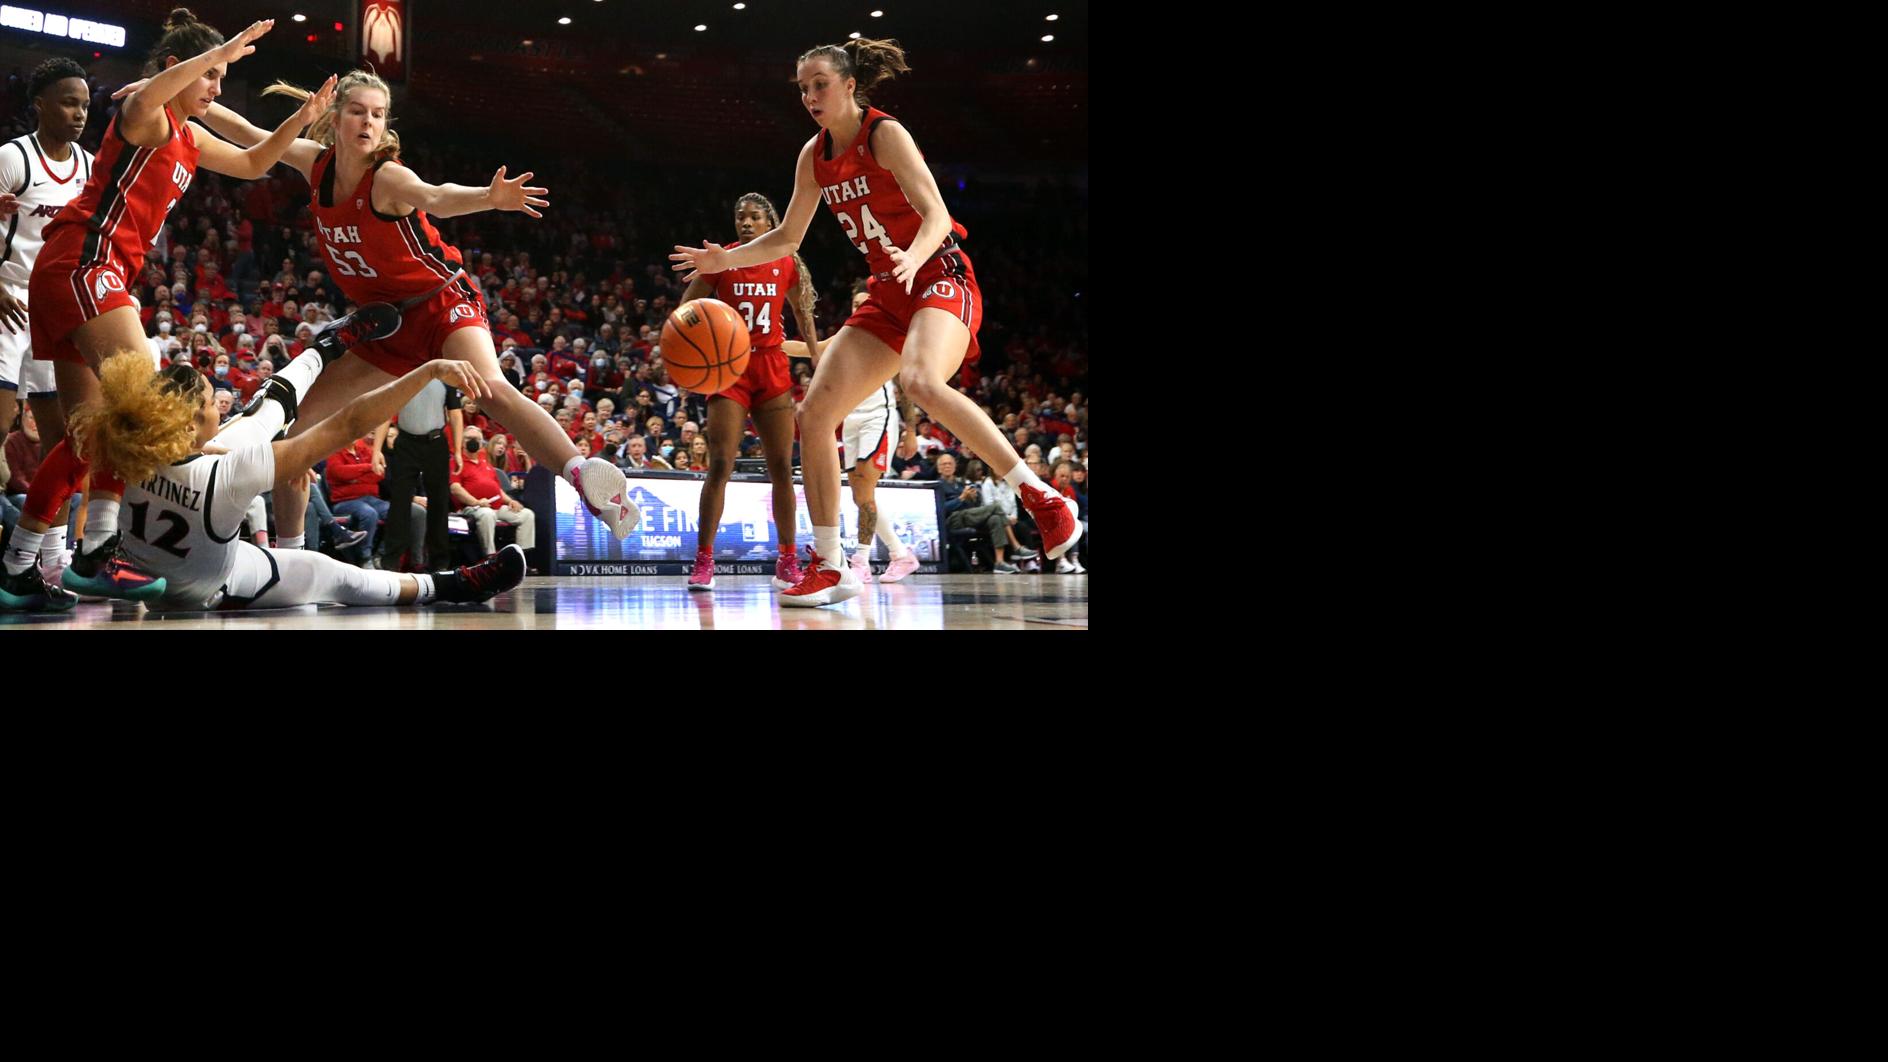 Love Utah Jazz Basketball' Women's Rolled Sleeve T-Shirt